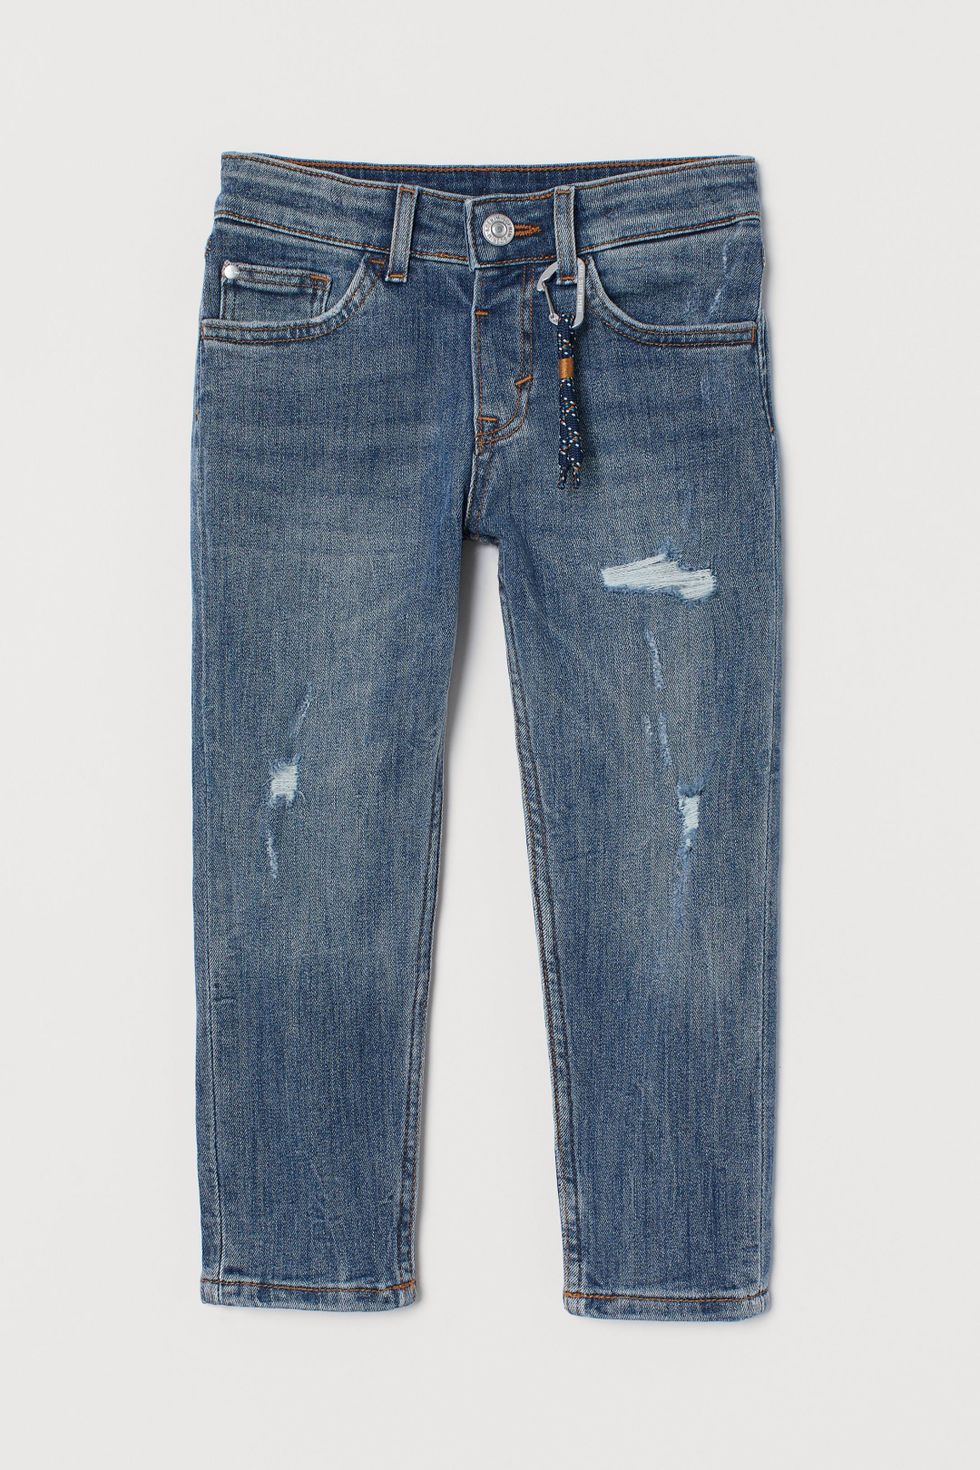 H&M distressed jeans